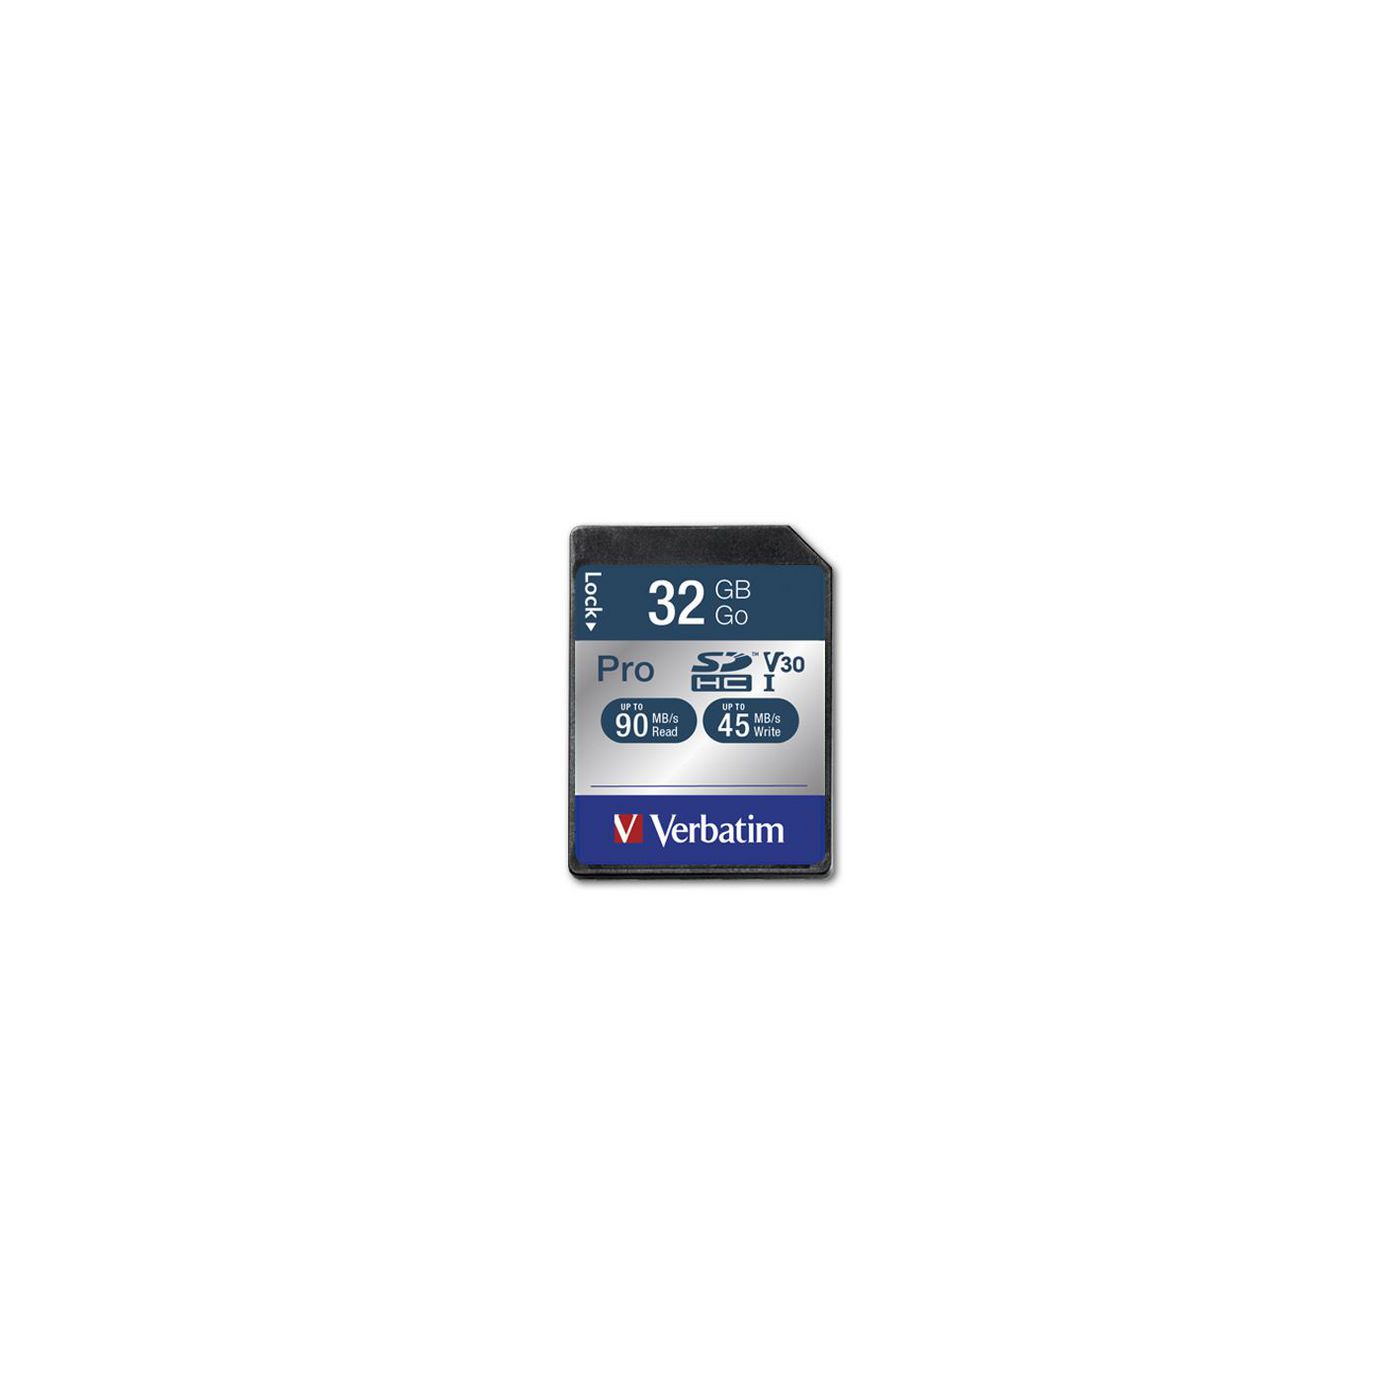 Pro memory card 32 GB SDHC